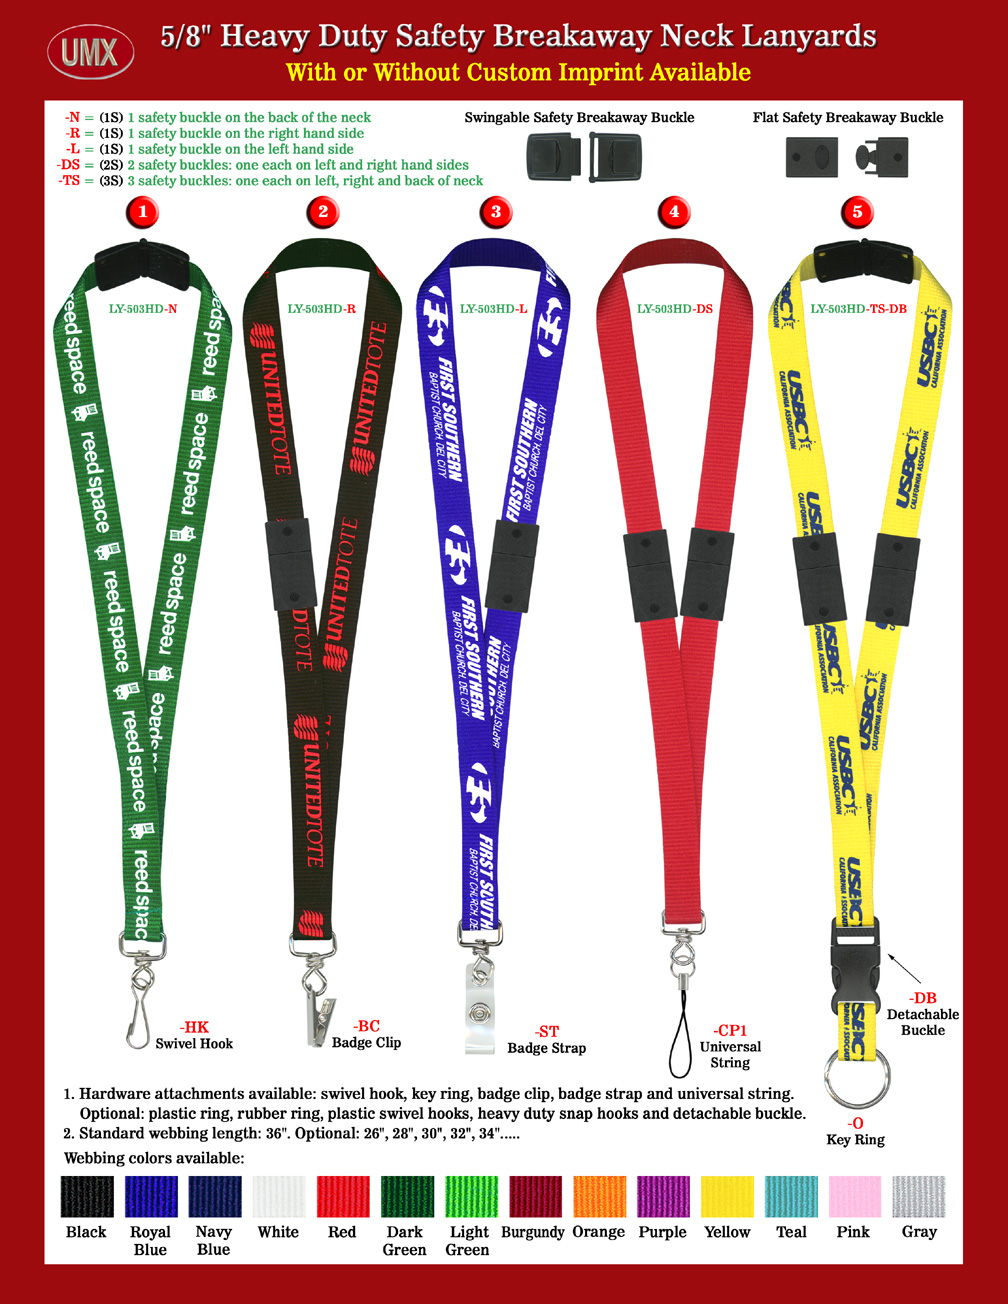 5/8" LY-503HD Most Favorate Safety Badge Holder Neck Lanyards - Best Seller Safety Models